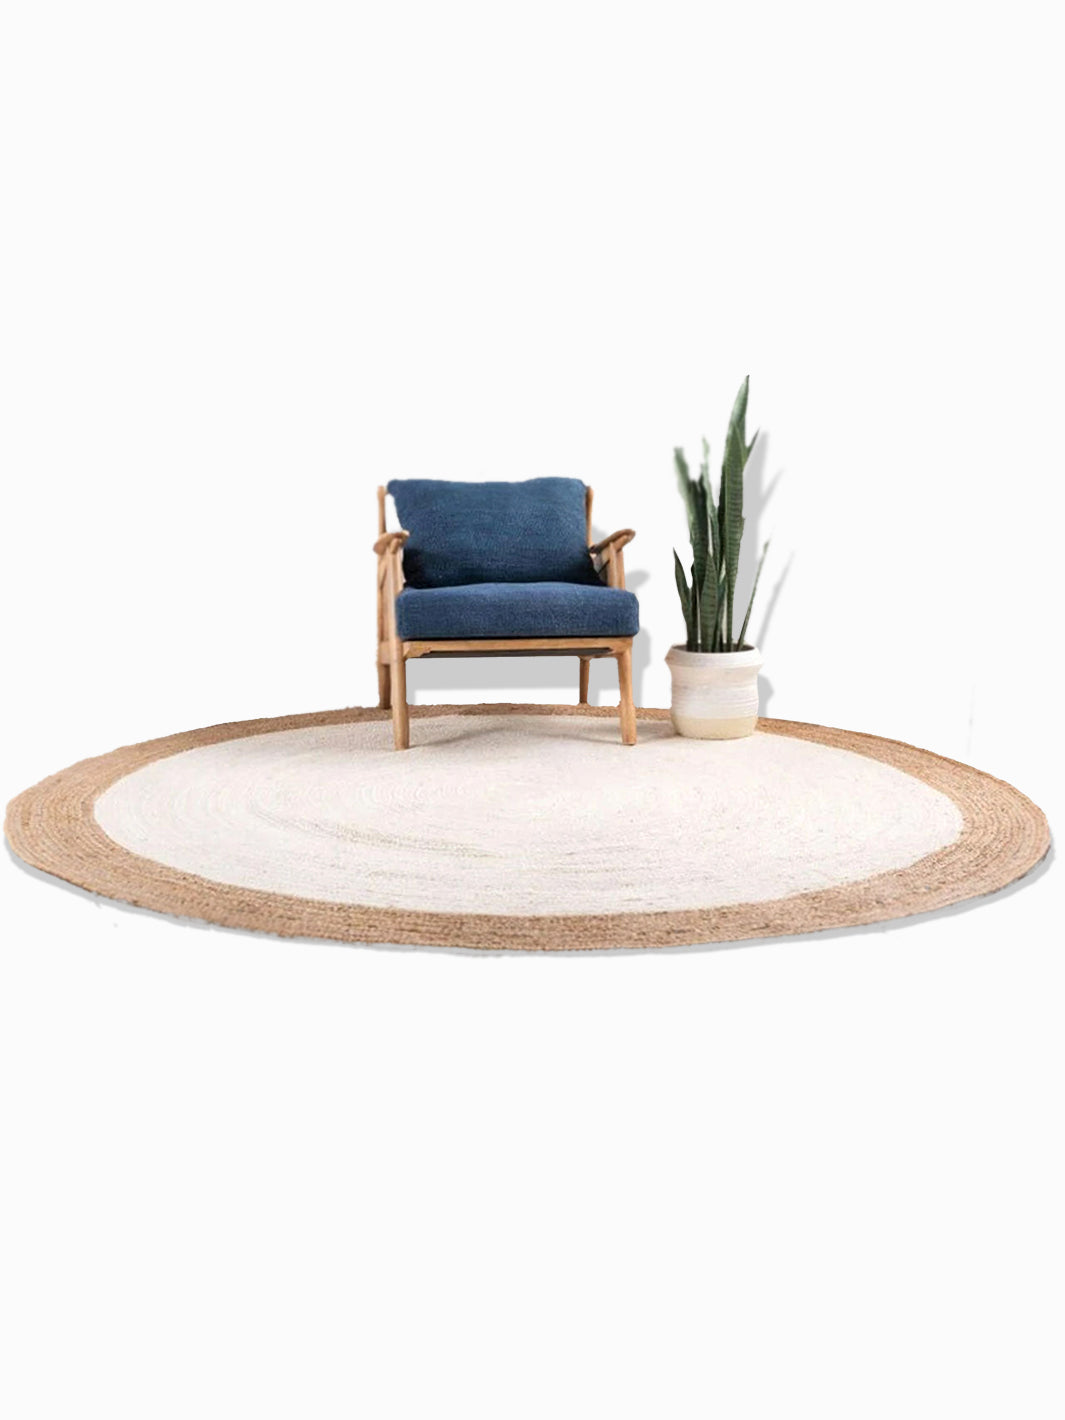 Round Jute Rug, Boho Round Rug, Natural Jute Rug, Bordered Round Rug,  Circle Rug, Home Decor Round Rug for Living & Indoor Carpet (7x7 Sq.Feet)